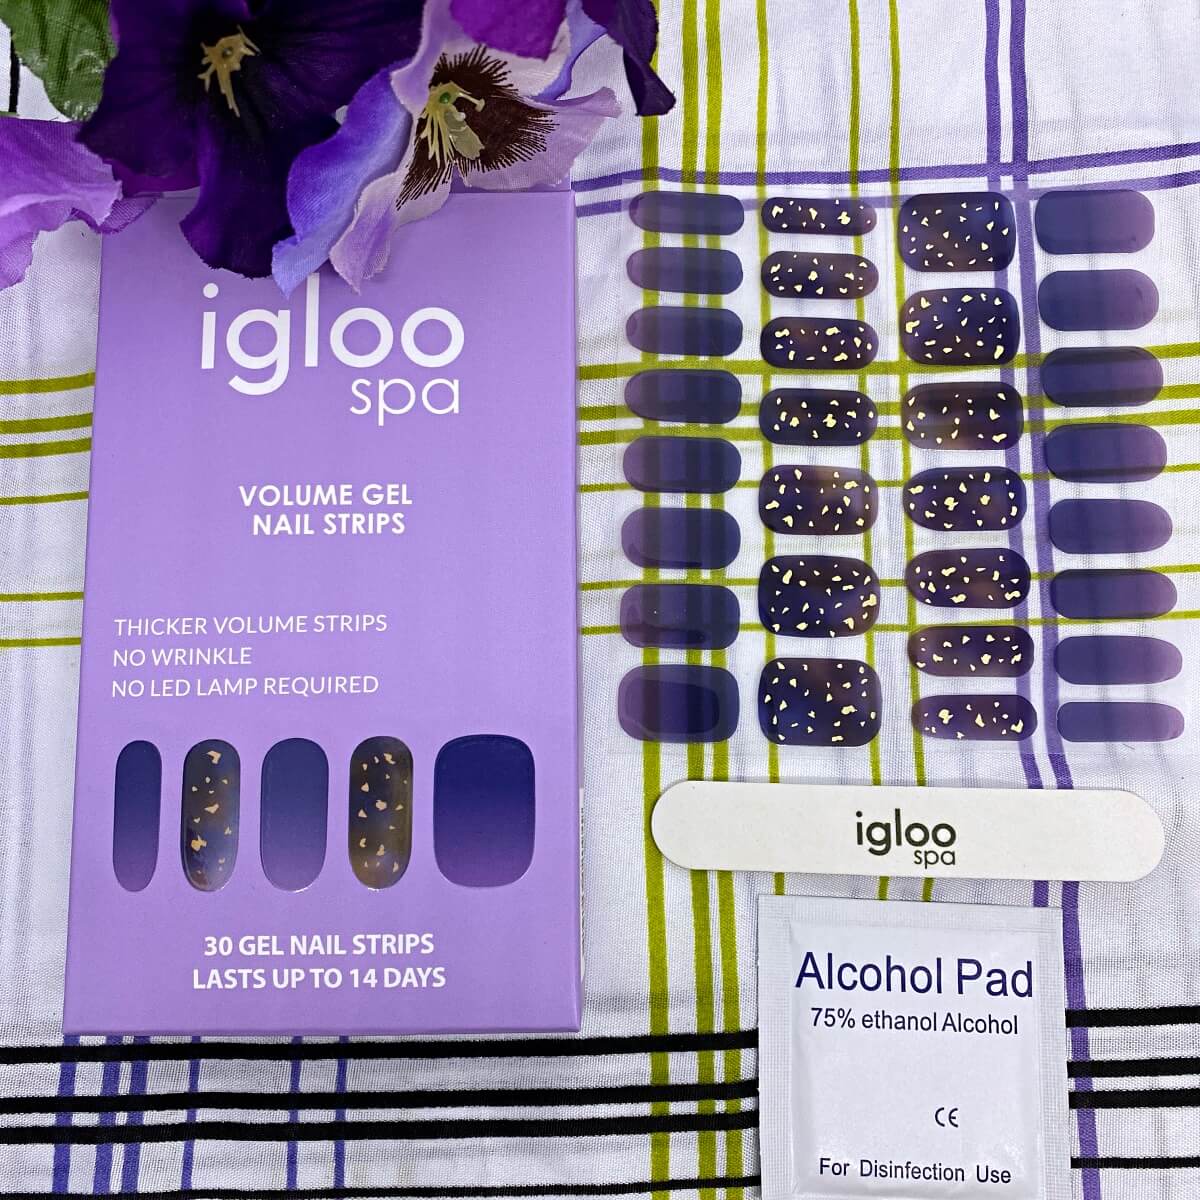 igloo spa volume gel nail strips galaxy dust